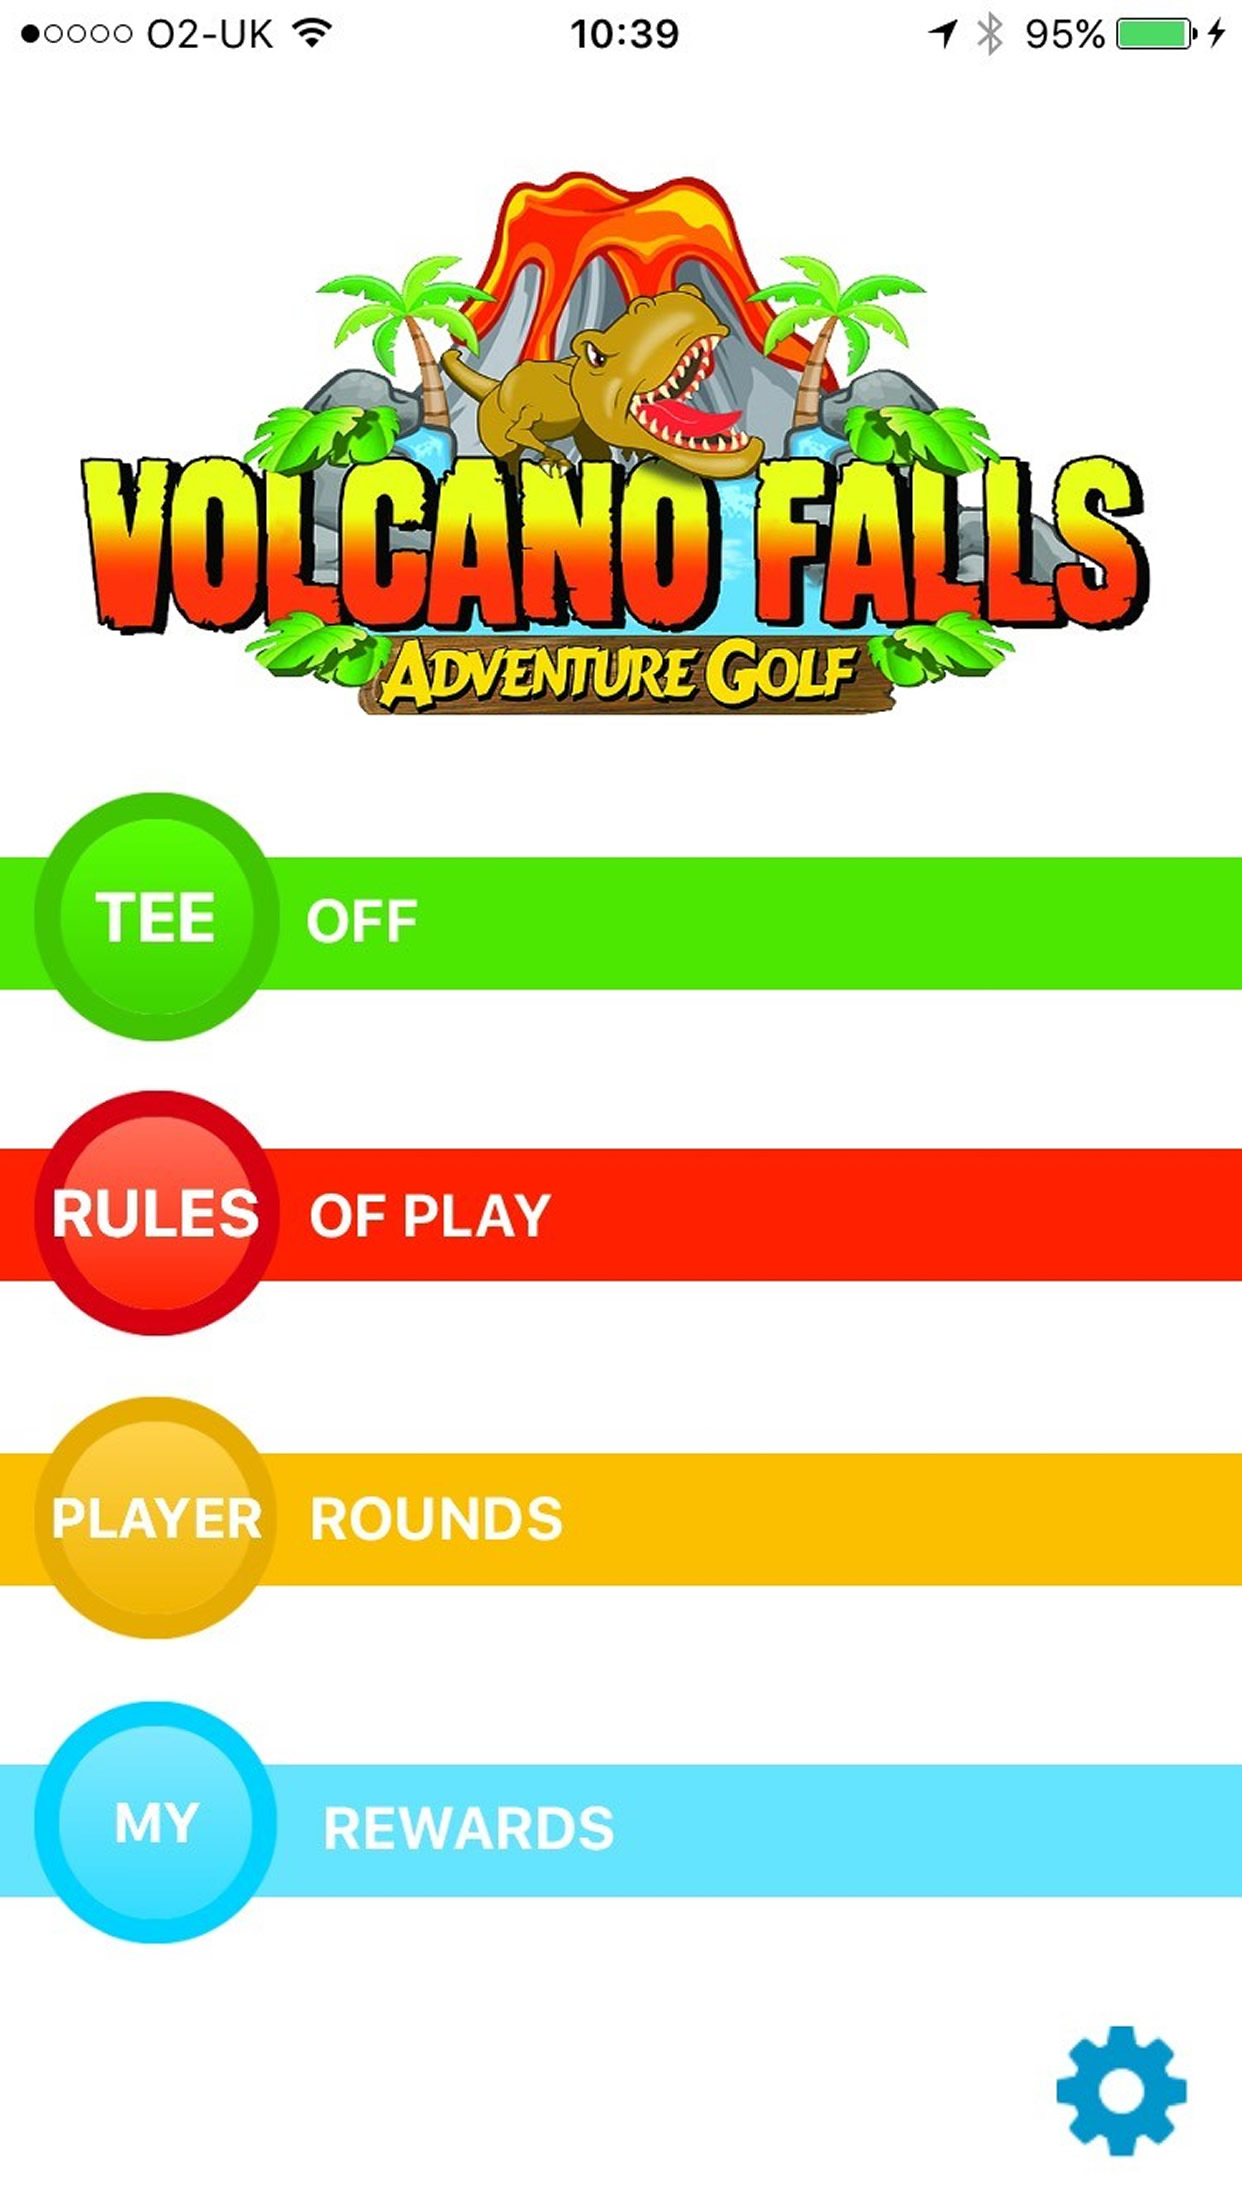 mini golf app at Volcano Falls in Castleford UK